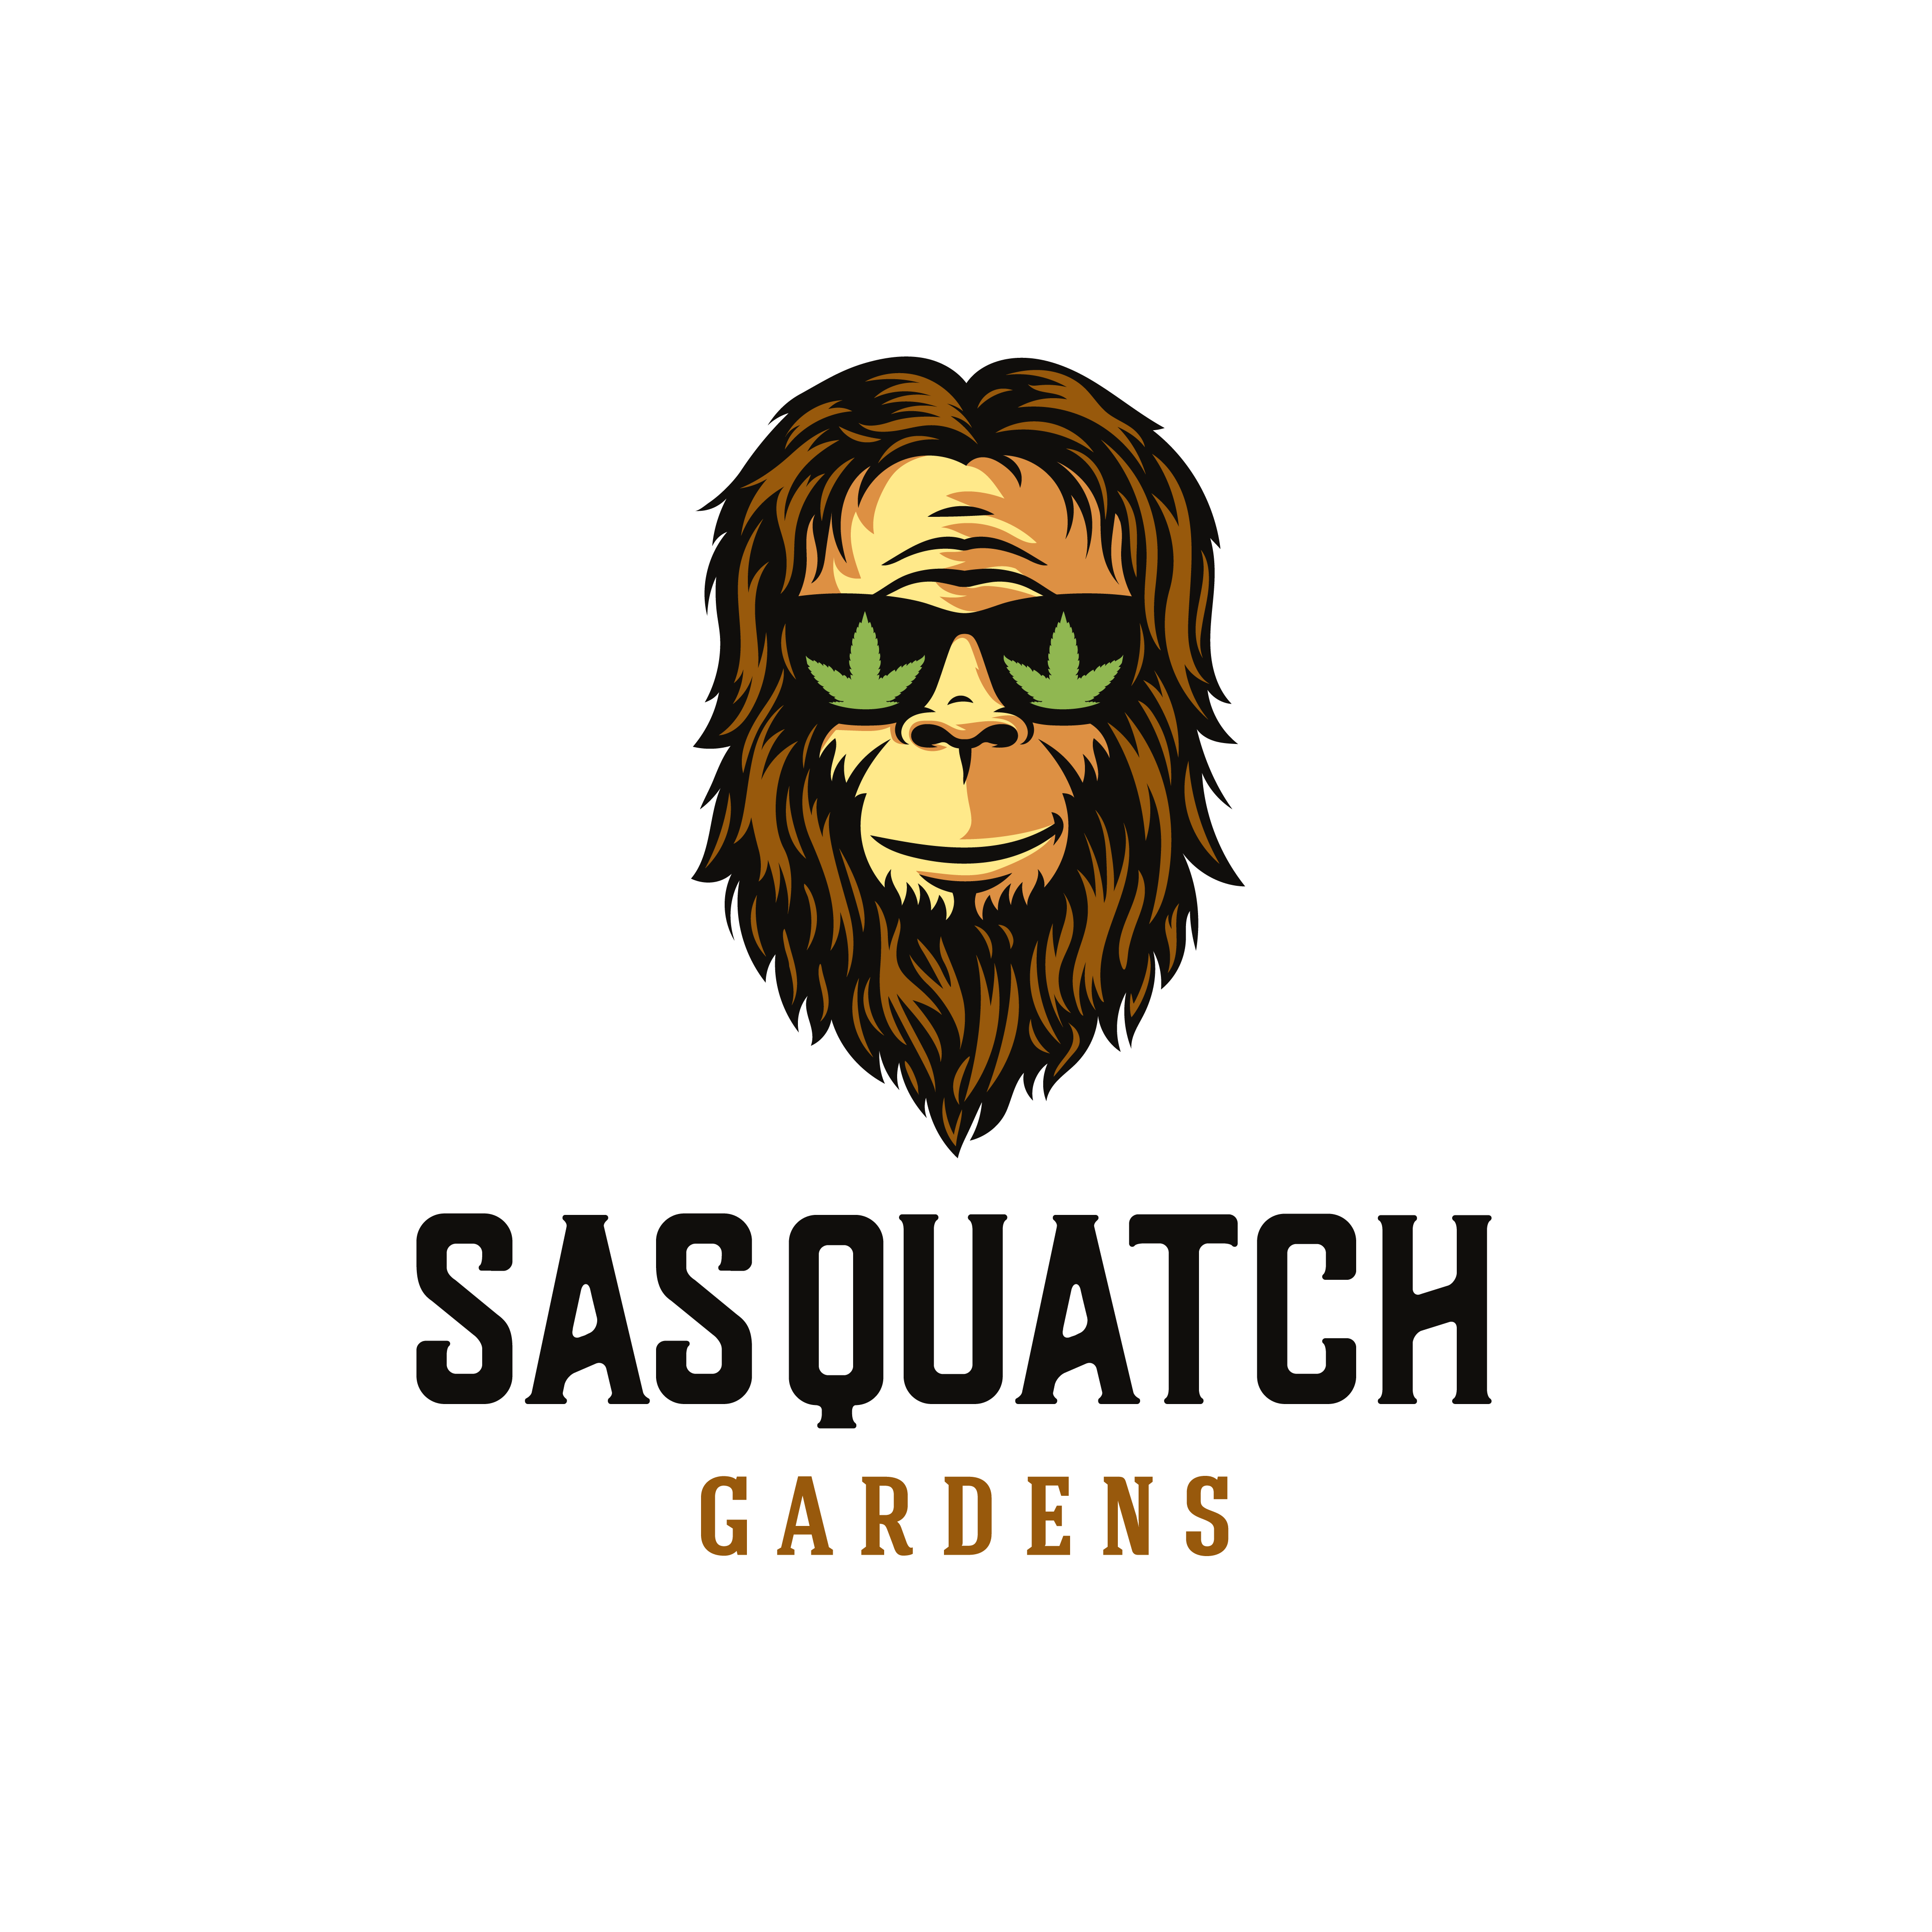 Sasquatch Gardens logo